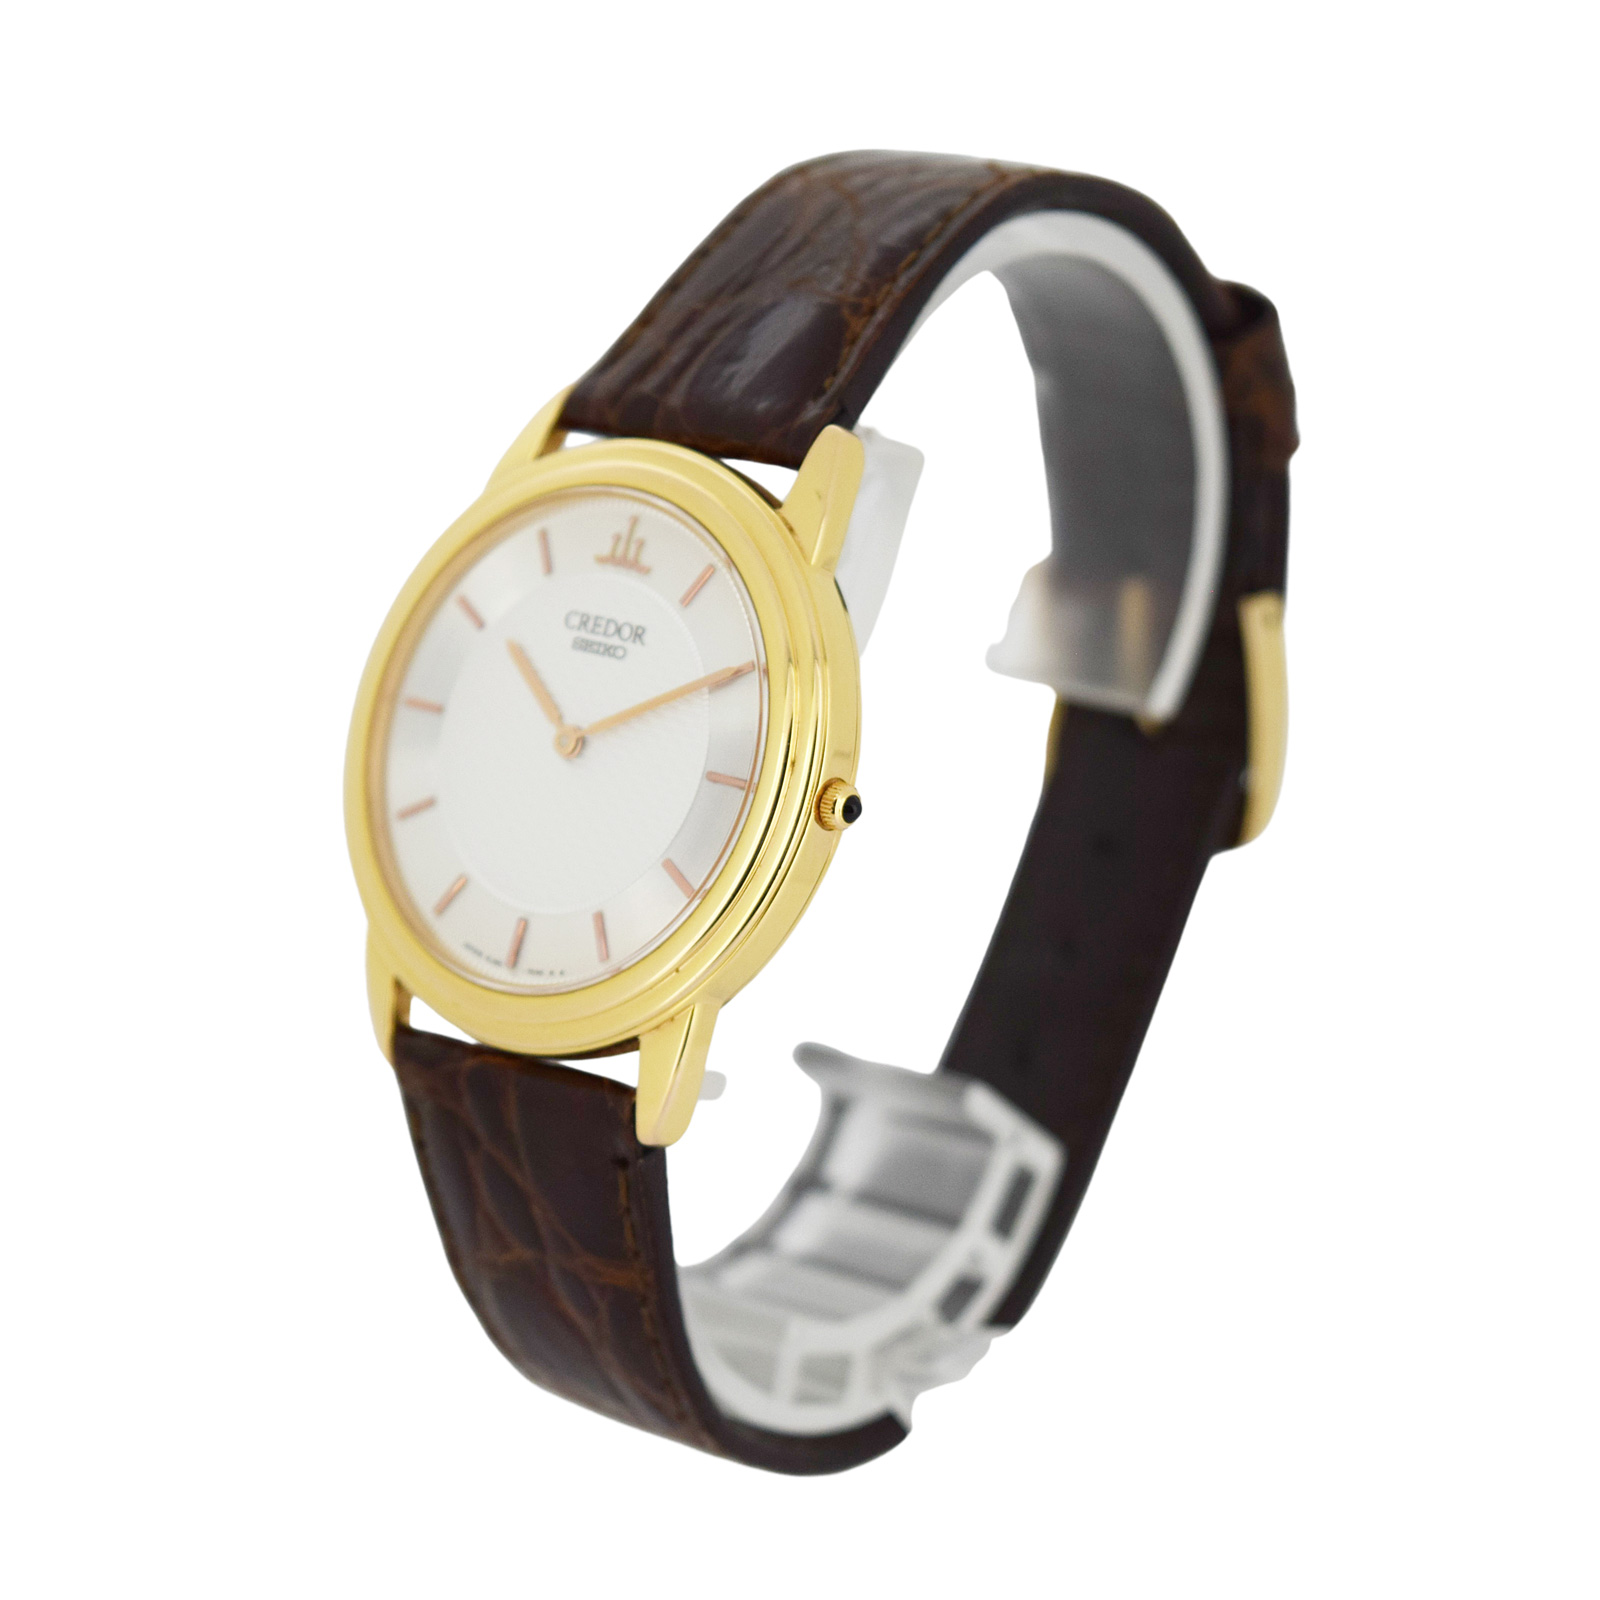 K18YG SEIKO セイコー クレドール GBAT012 8J80-7020 メンズ 腕時計 